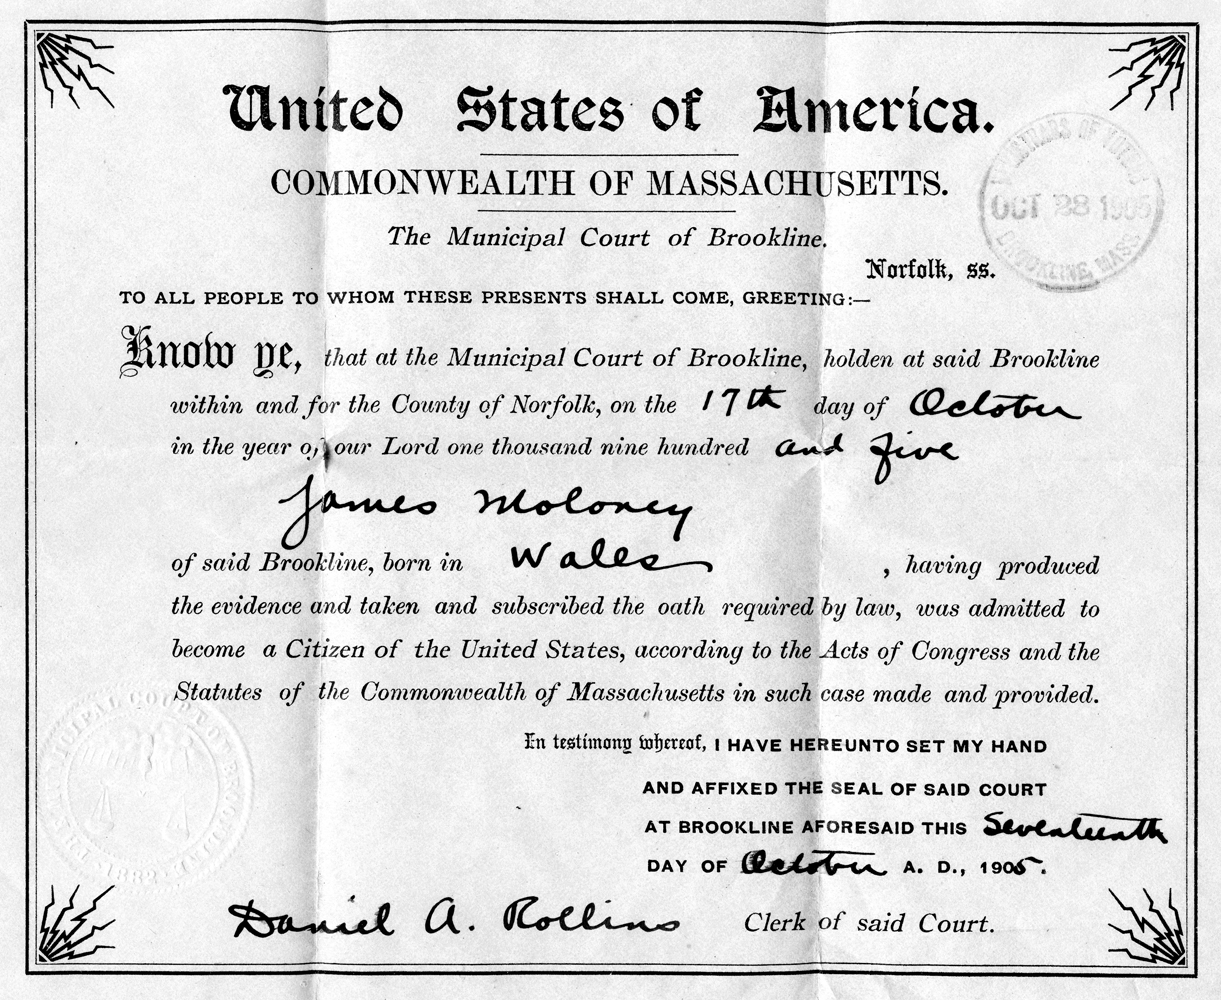 James Moloney Citizenship, 1905